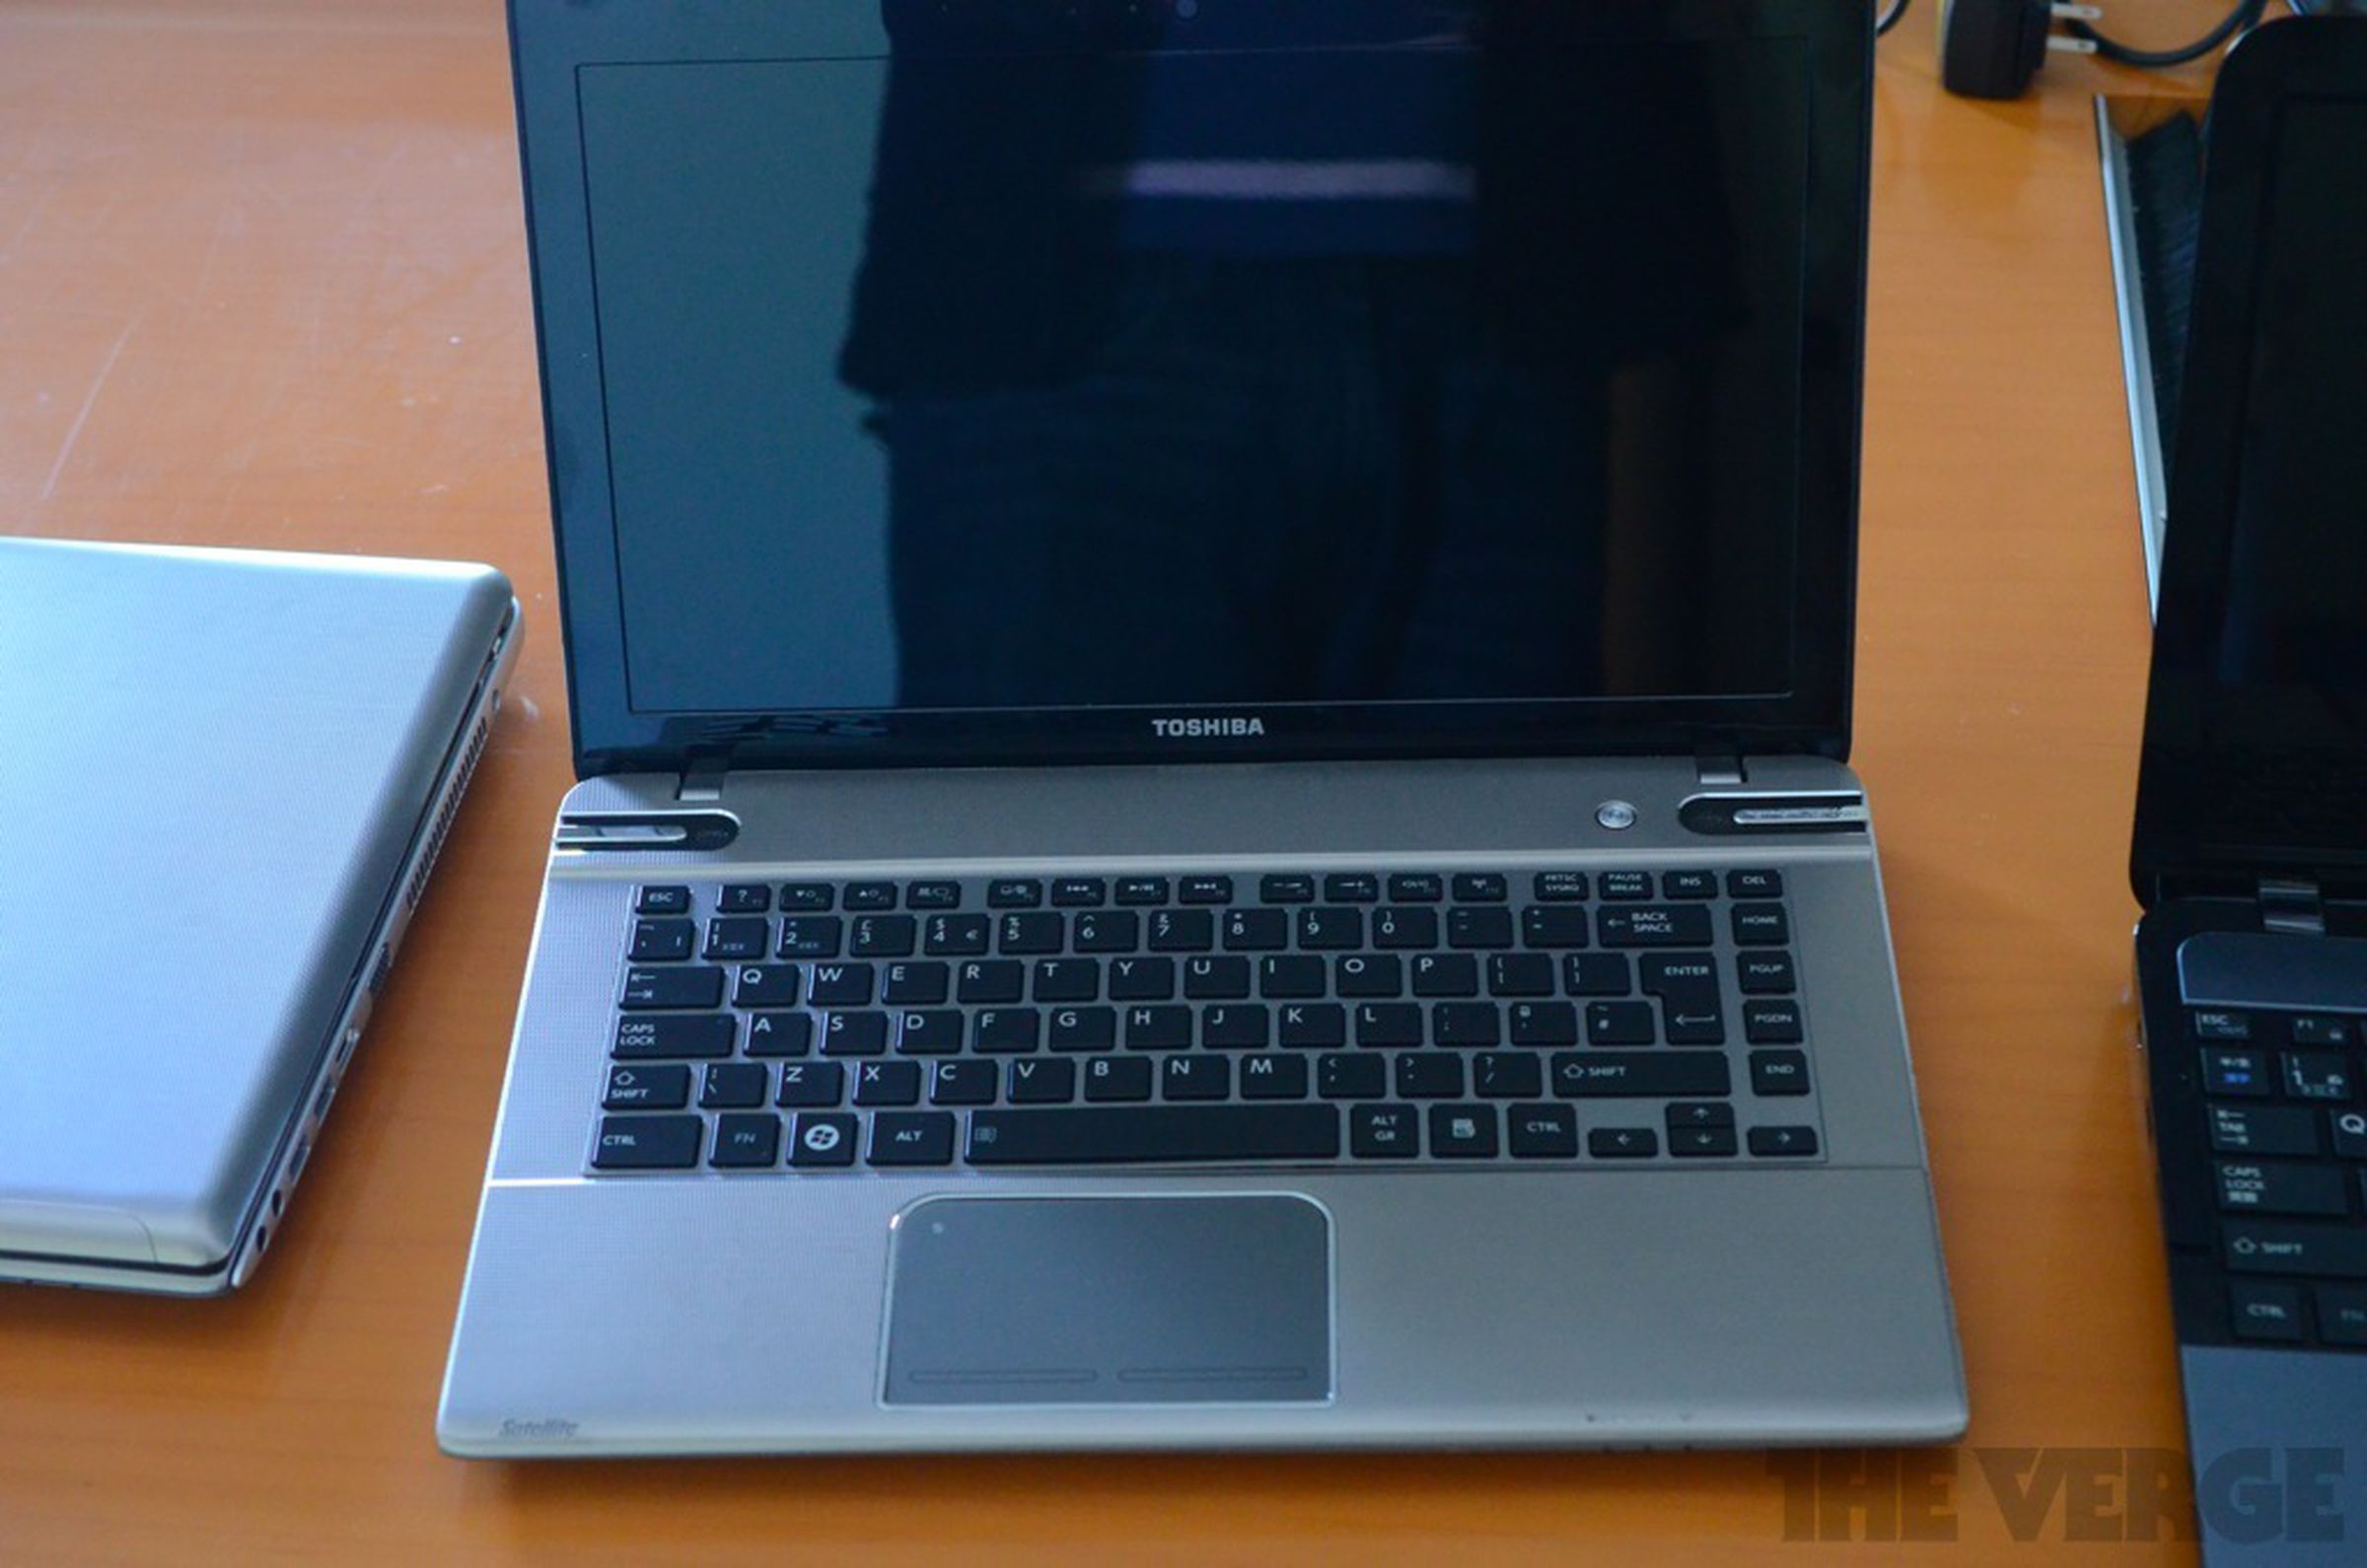 Toshiba's 2012 laptop lineup